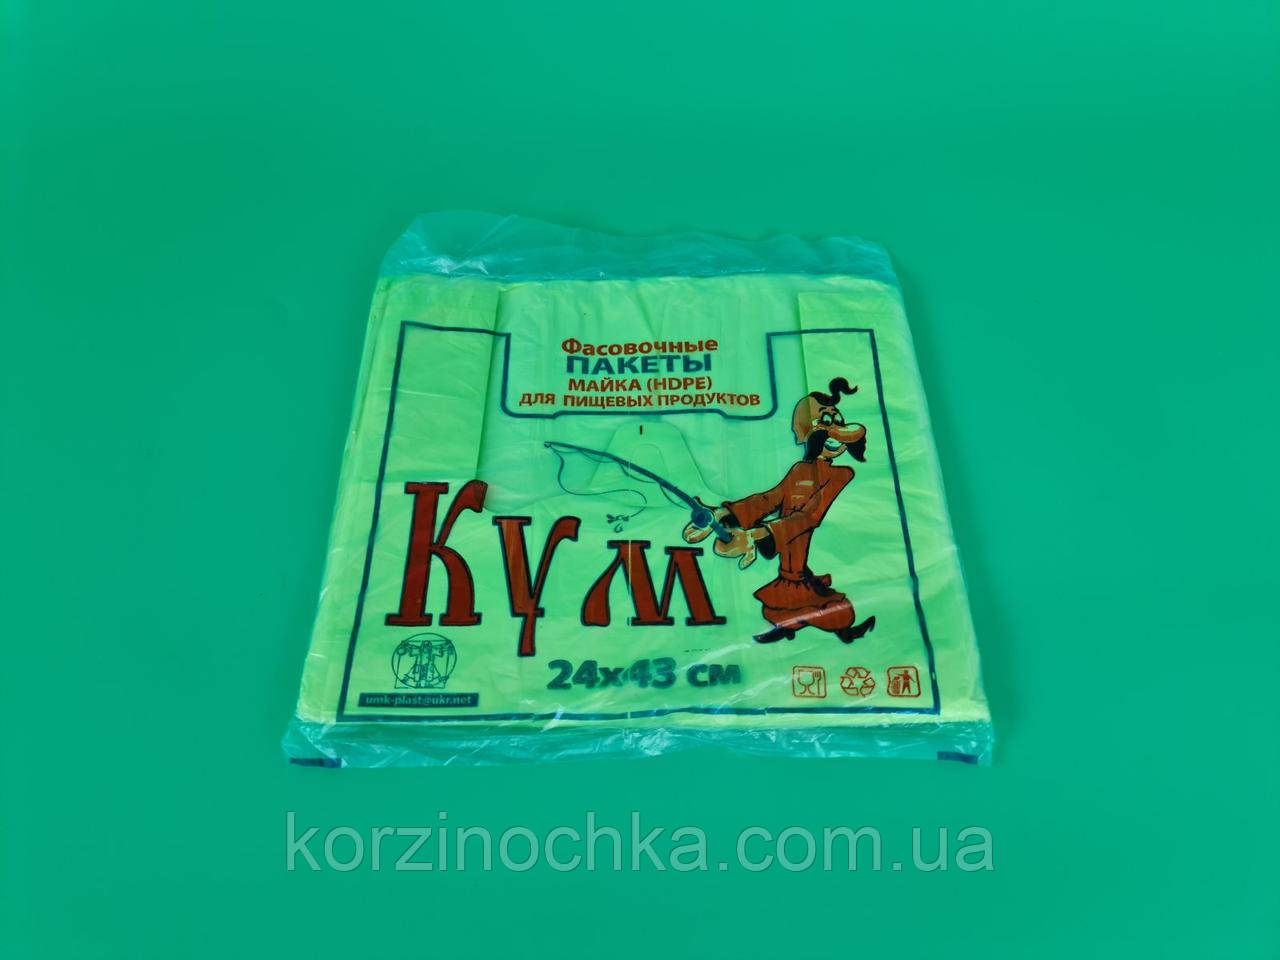 Фасувальні пакети Майка 24*43 Кум Салатова(100 шт)(1 пач)Поліетиленові пакувальні кульки